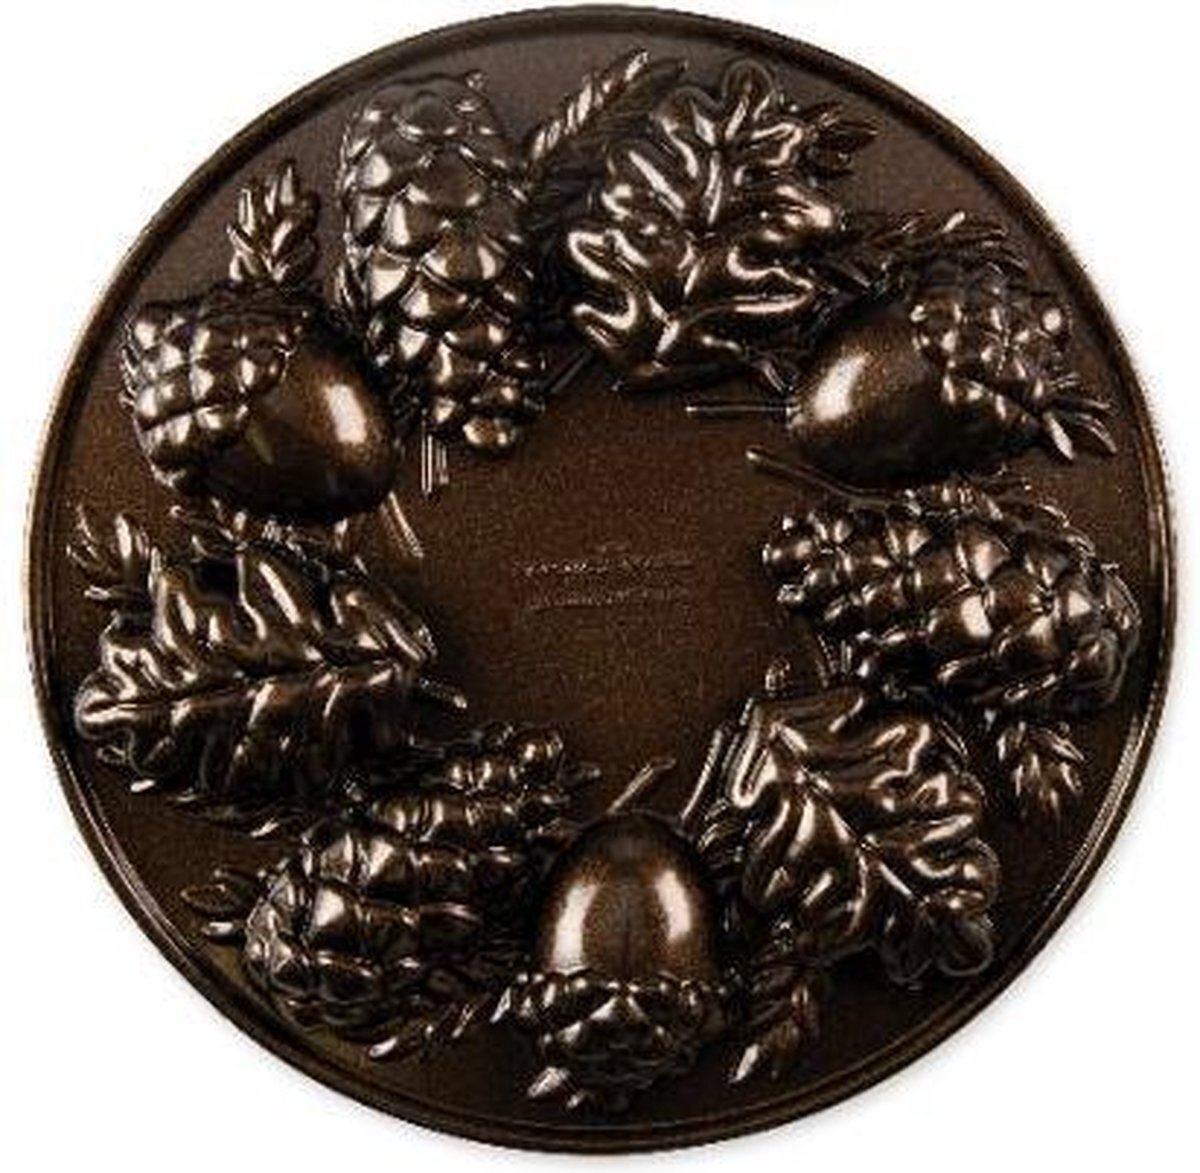 Nordic Ware Bakvorm "Woodland Cakelet Pan" - |Fall Harvest Bronze